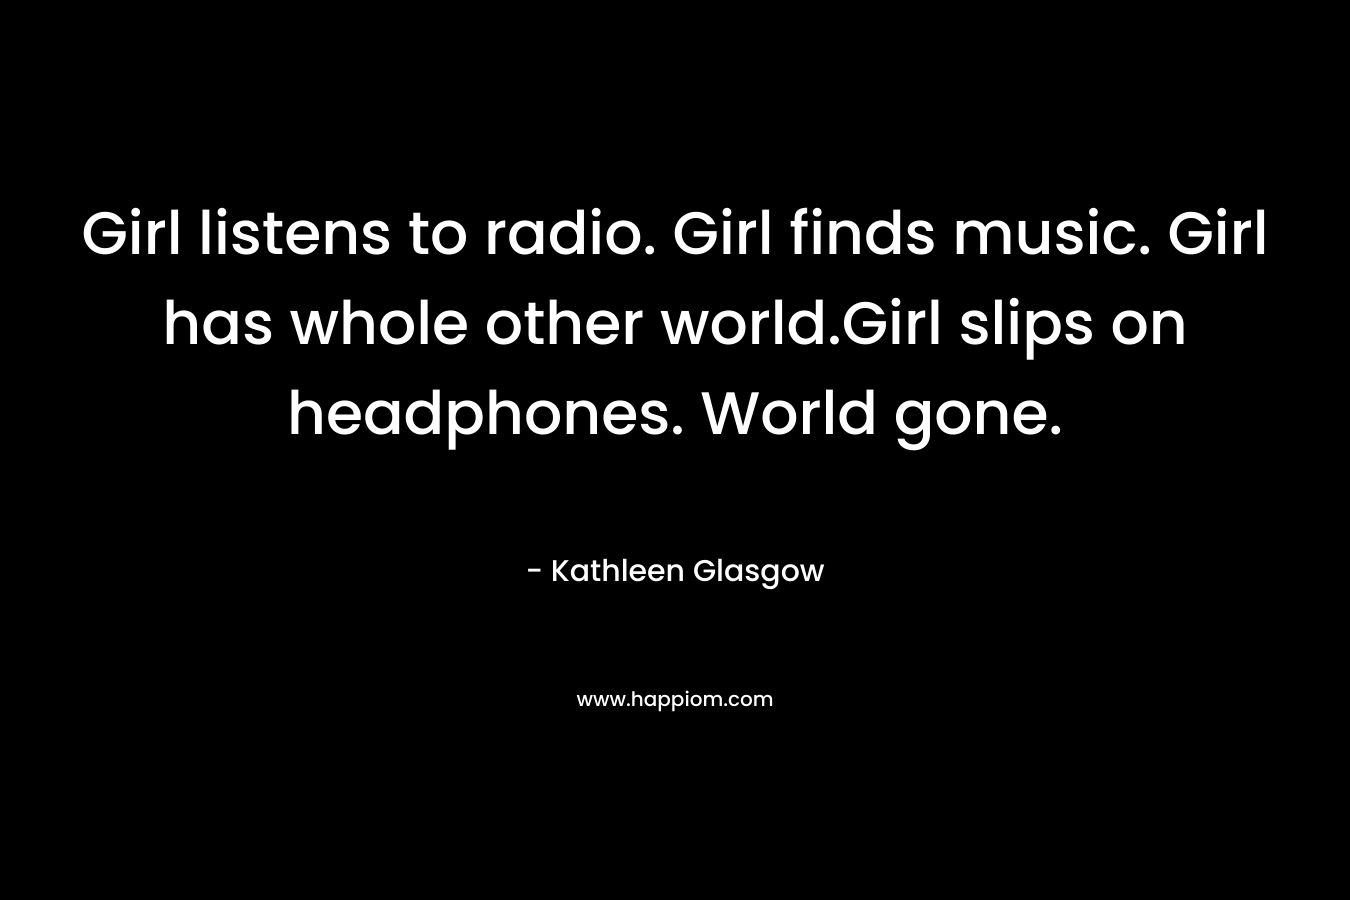 Girl listens to radio. Girl finds music. Girl has whole other world.Girl slips on headphones. World gone.